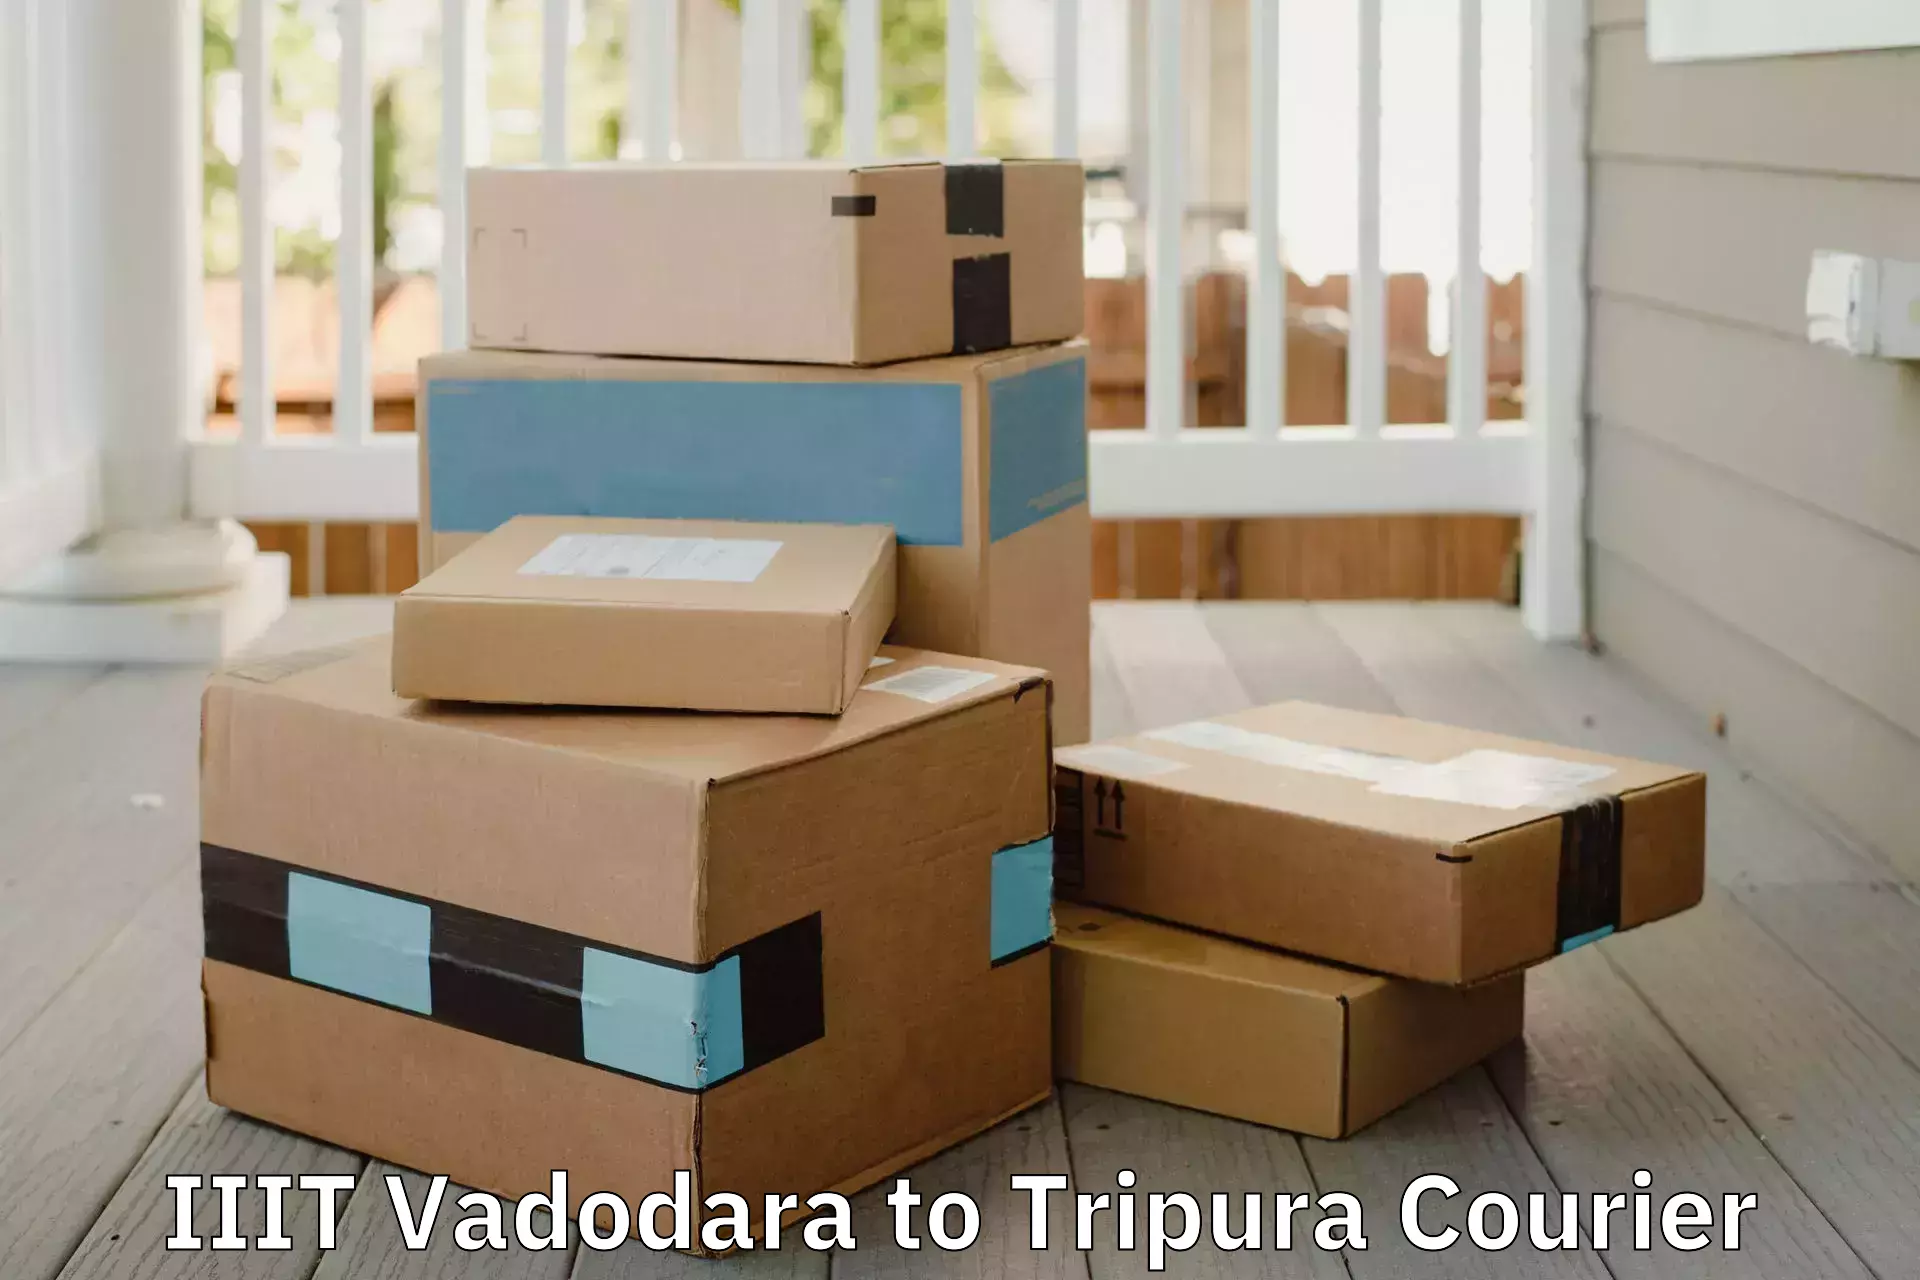 Trusted relocation experts IIIT Vadodara to Udaipur Tripura